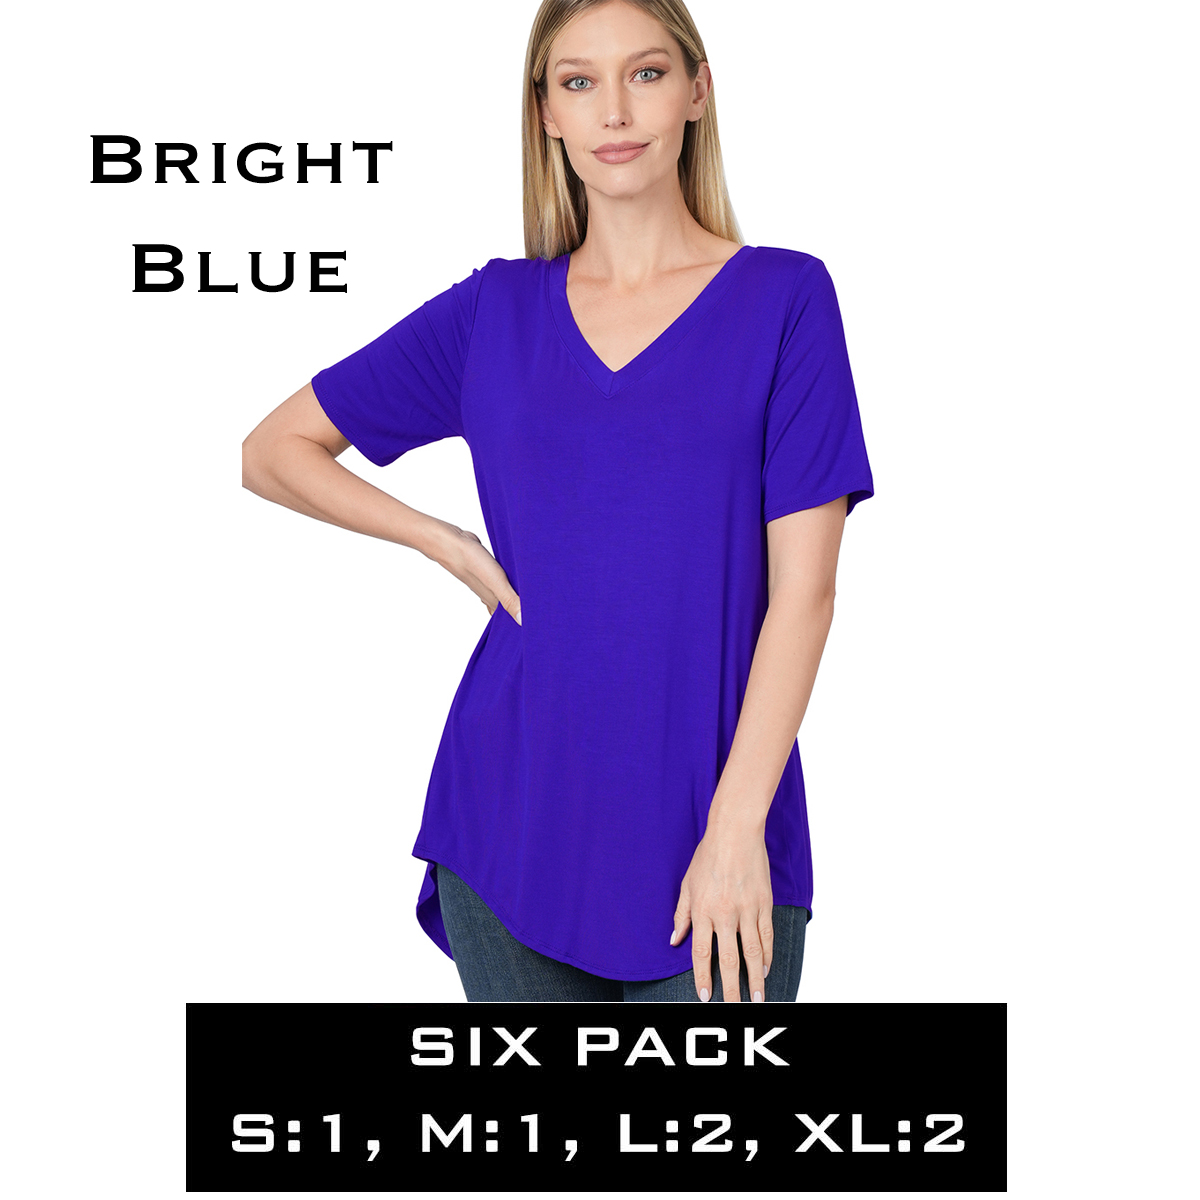 5541 - Bright Blue - Six Pack